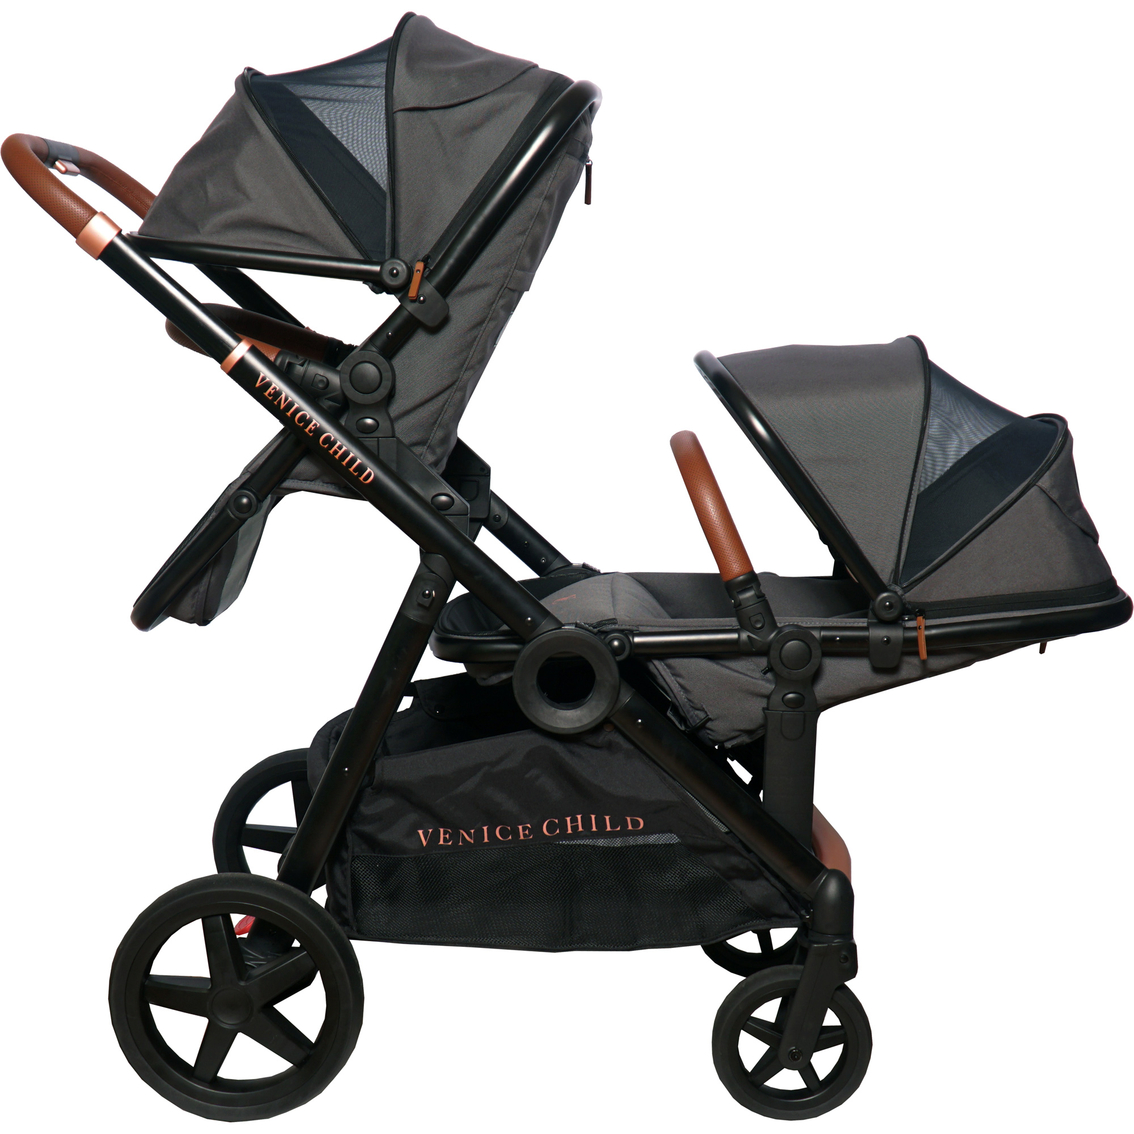 Venice Child Maverick Stroller Toddler Seat - Image 3 of 5